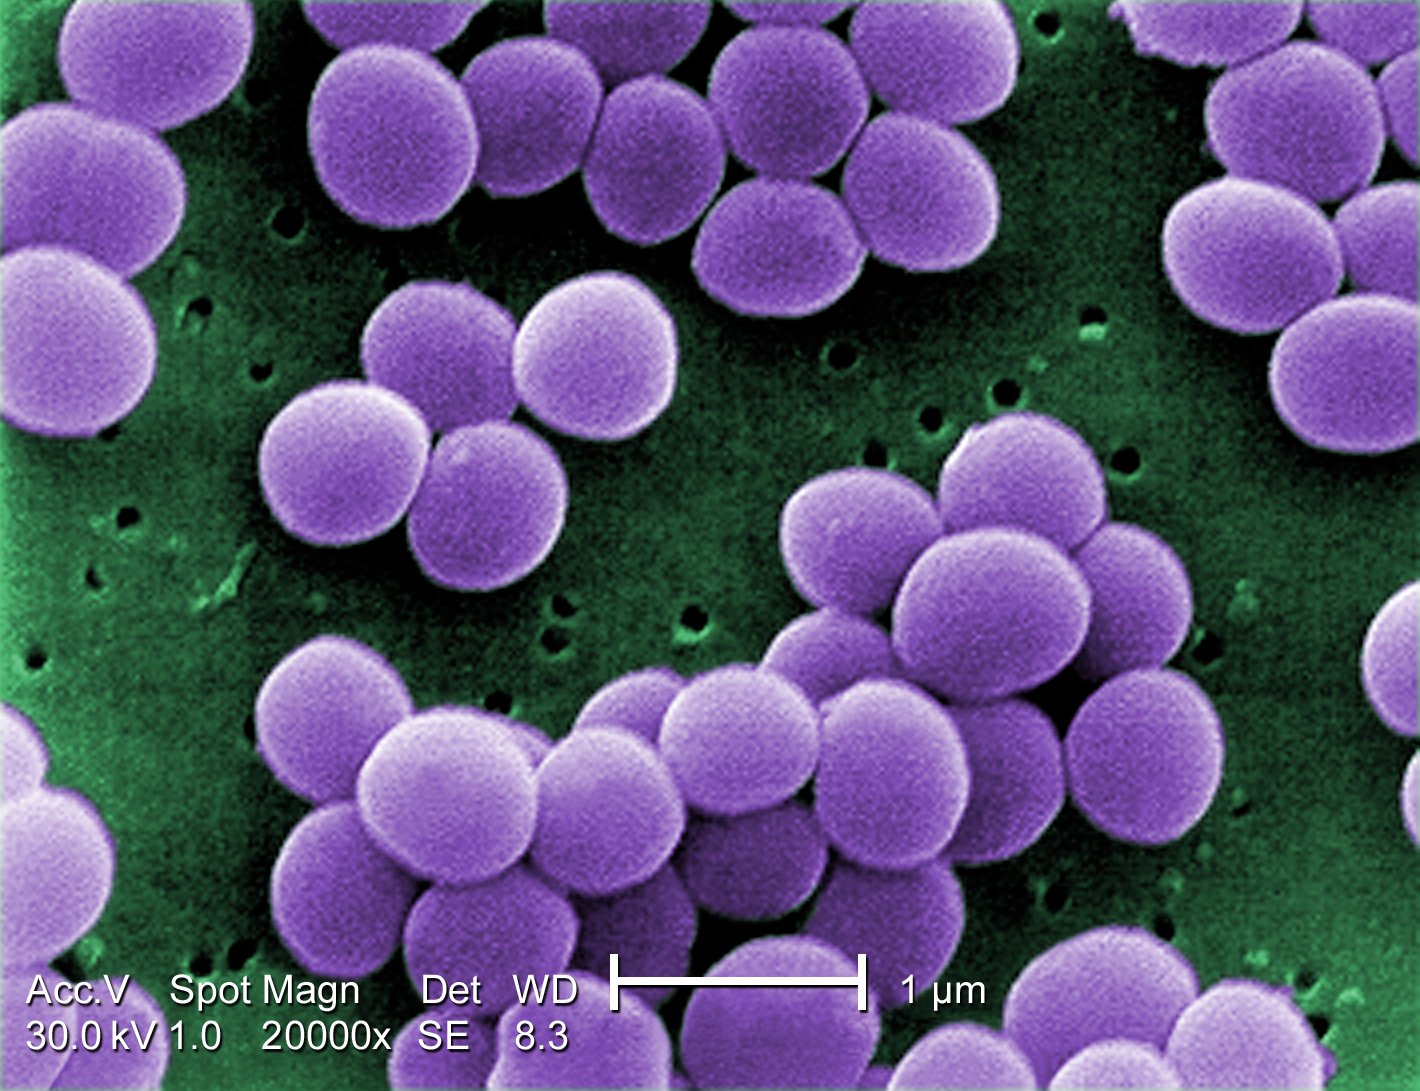 images/Staphylococcus aureus.jpg